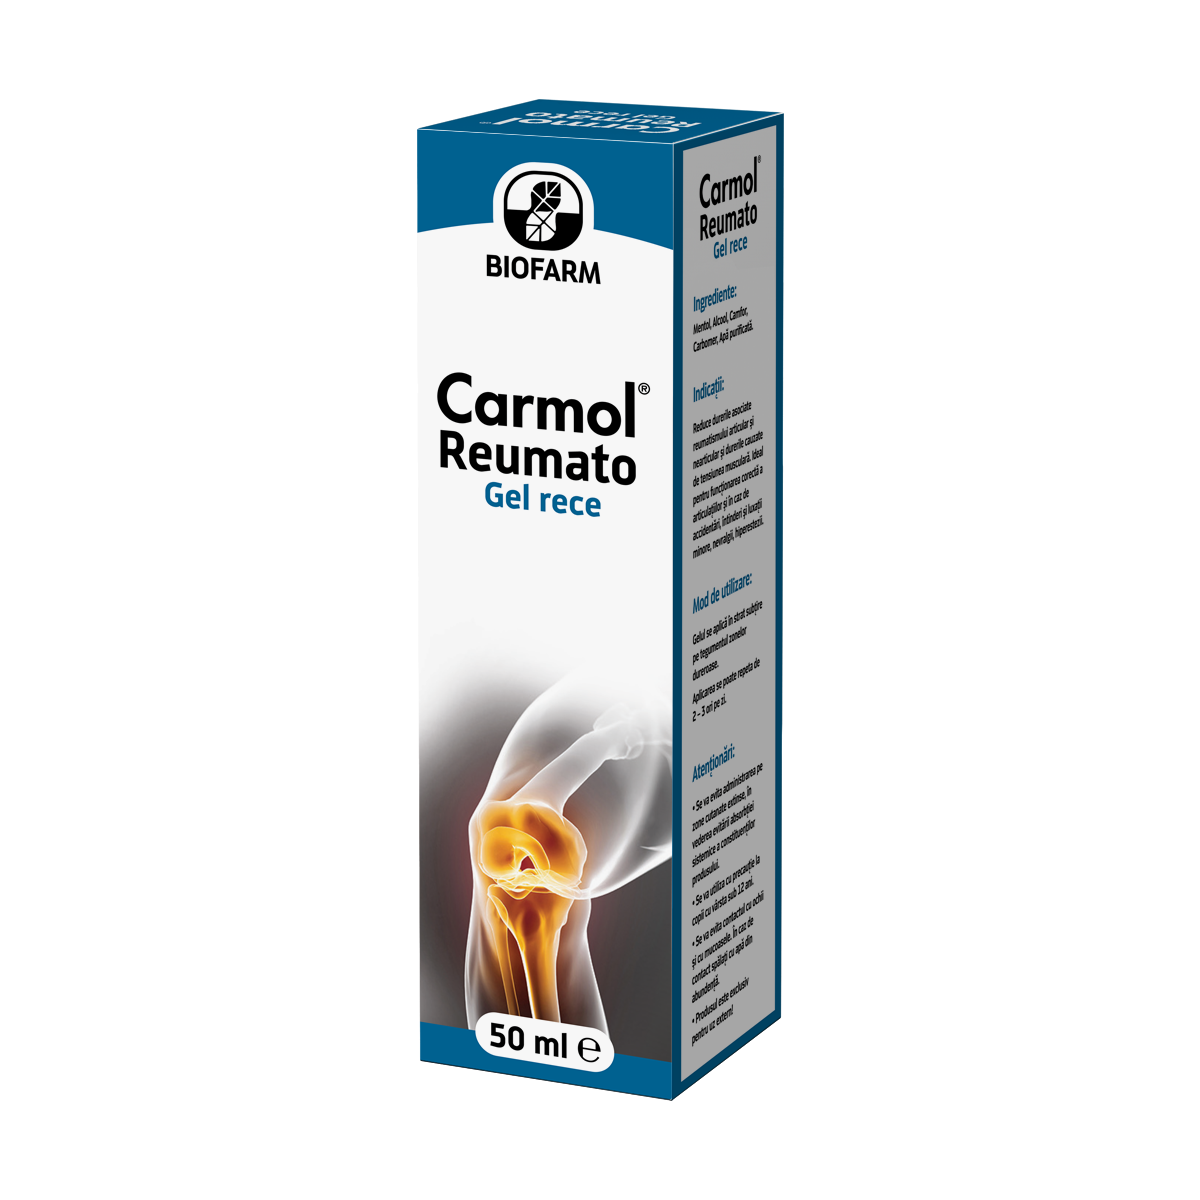 Dureri musculare - Carmol Reumato, gel rece, 50 ml, Biofarm, sinapis.ro